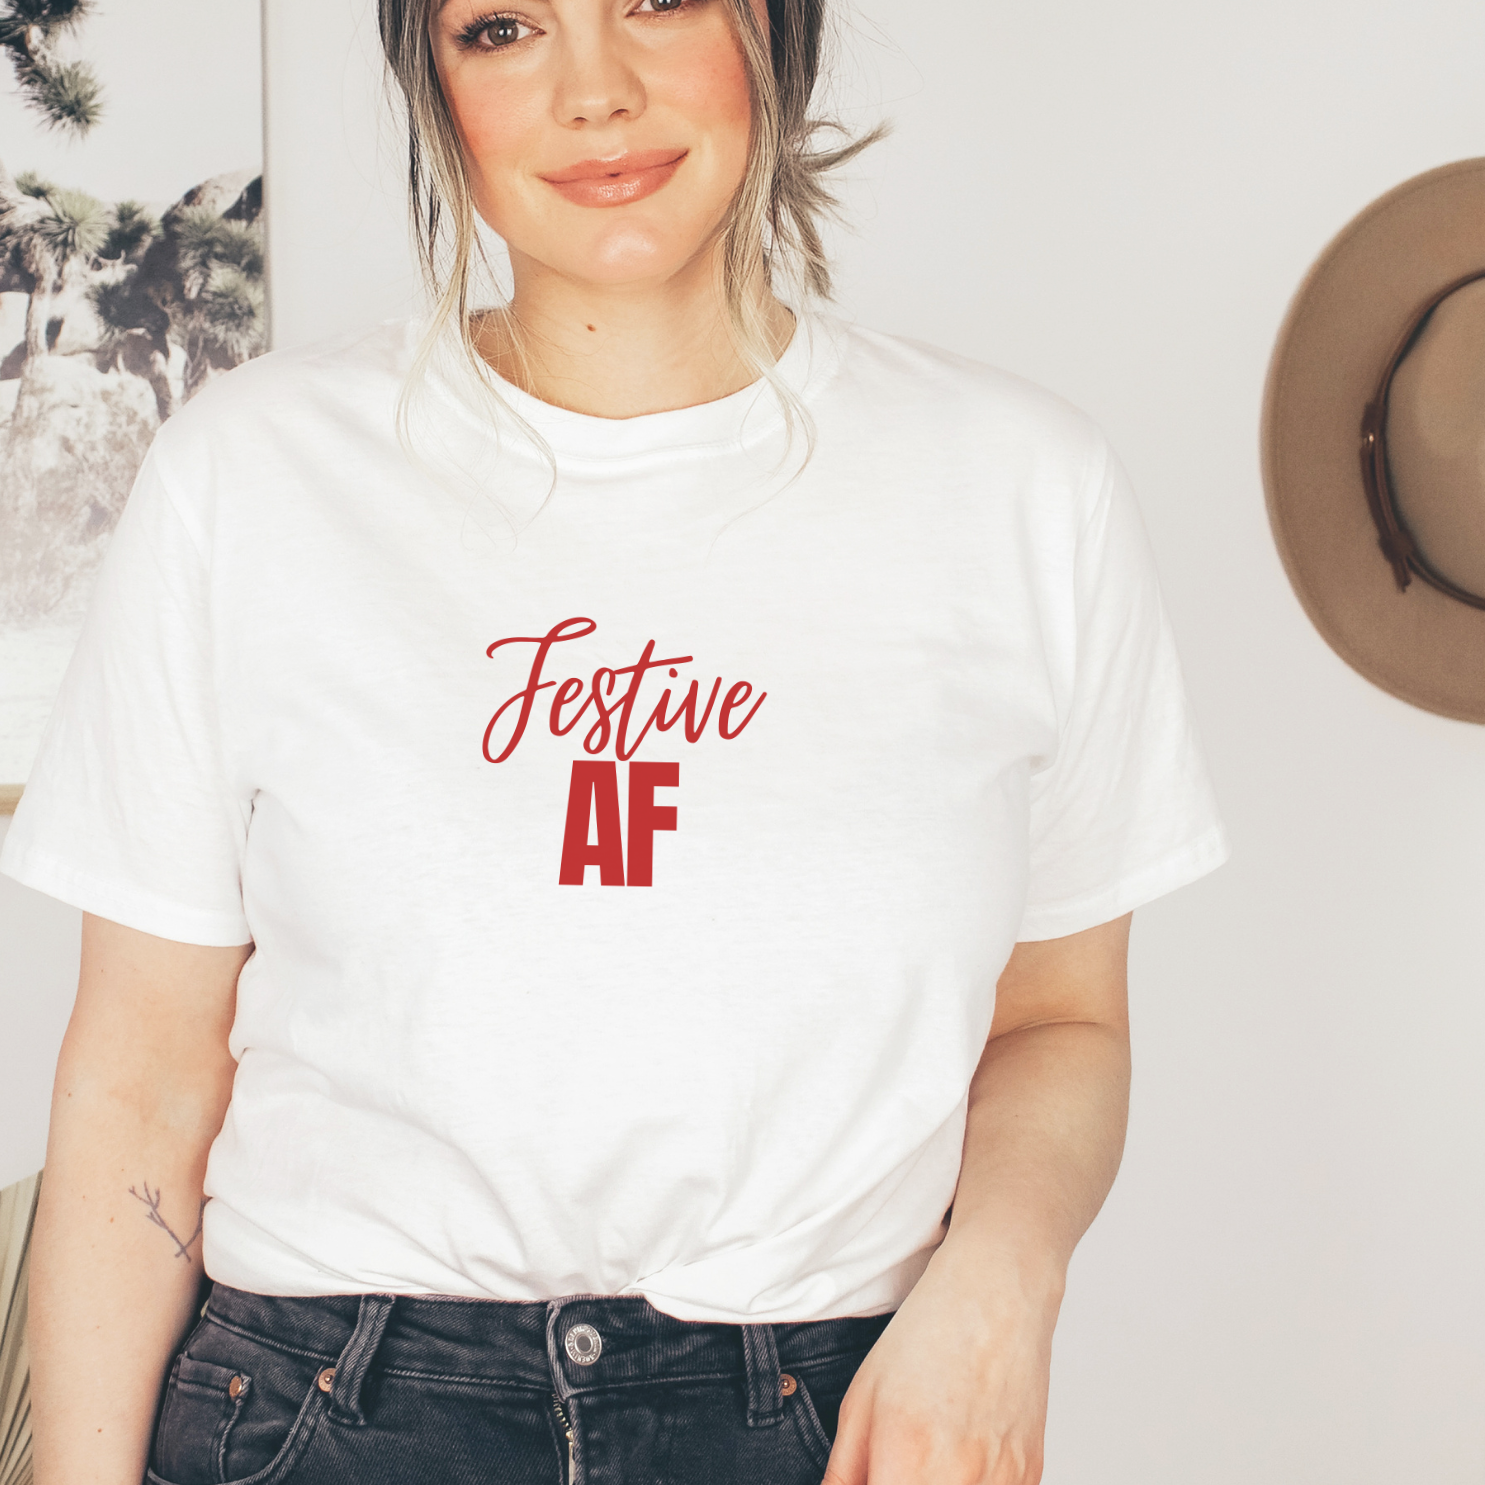 "Festive AF text design centered on a white unisex t-shirt."